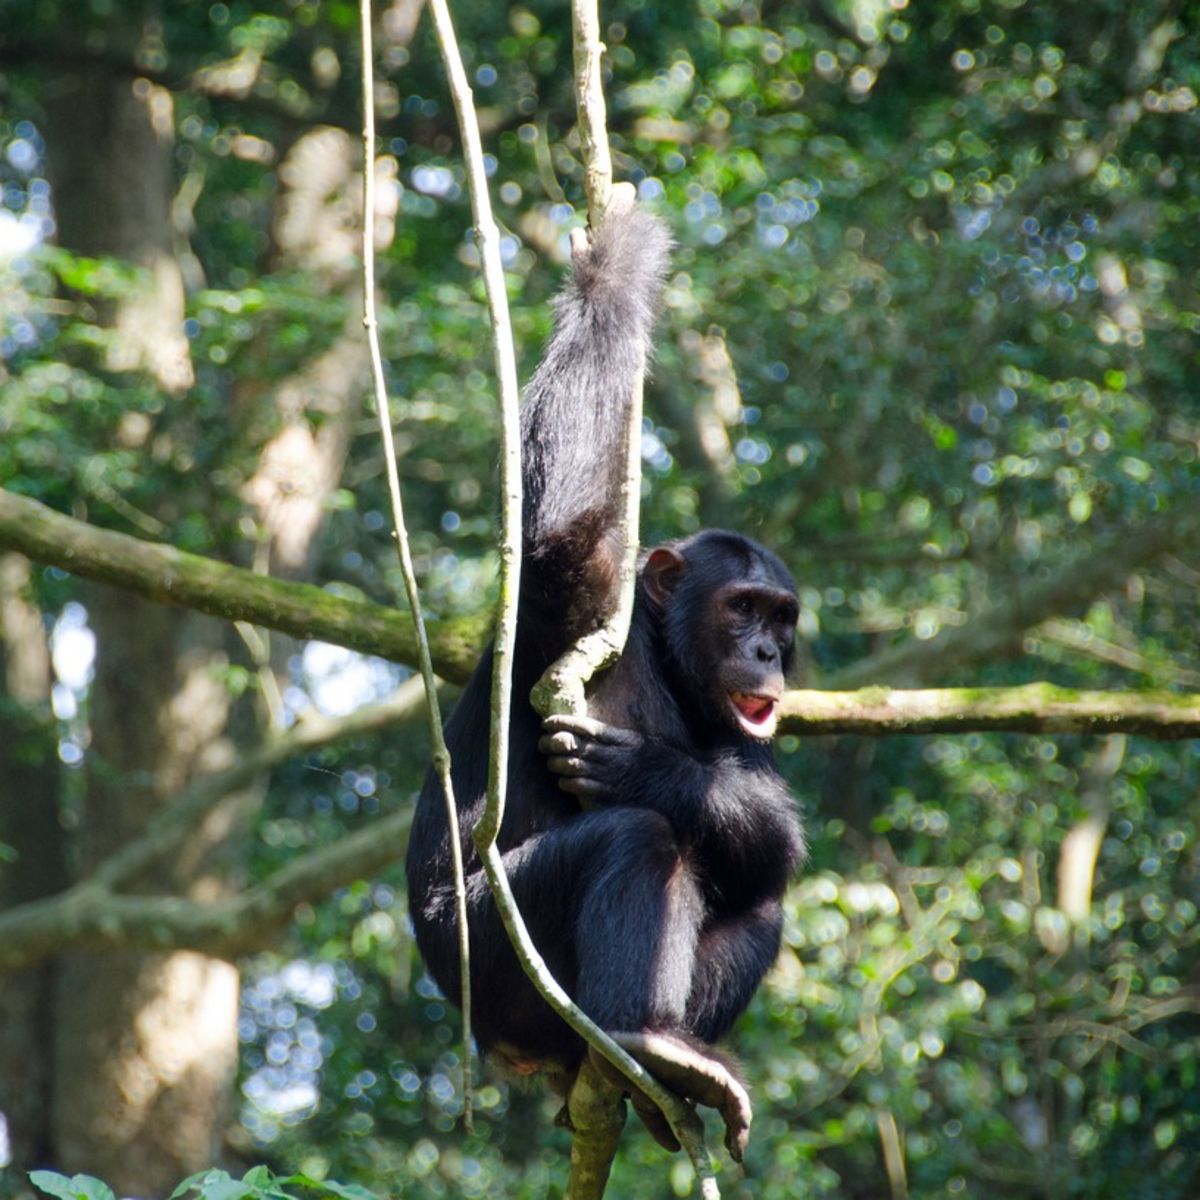 Chimpanzee in the Kyambura Gorge, Uganda 